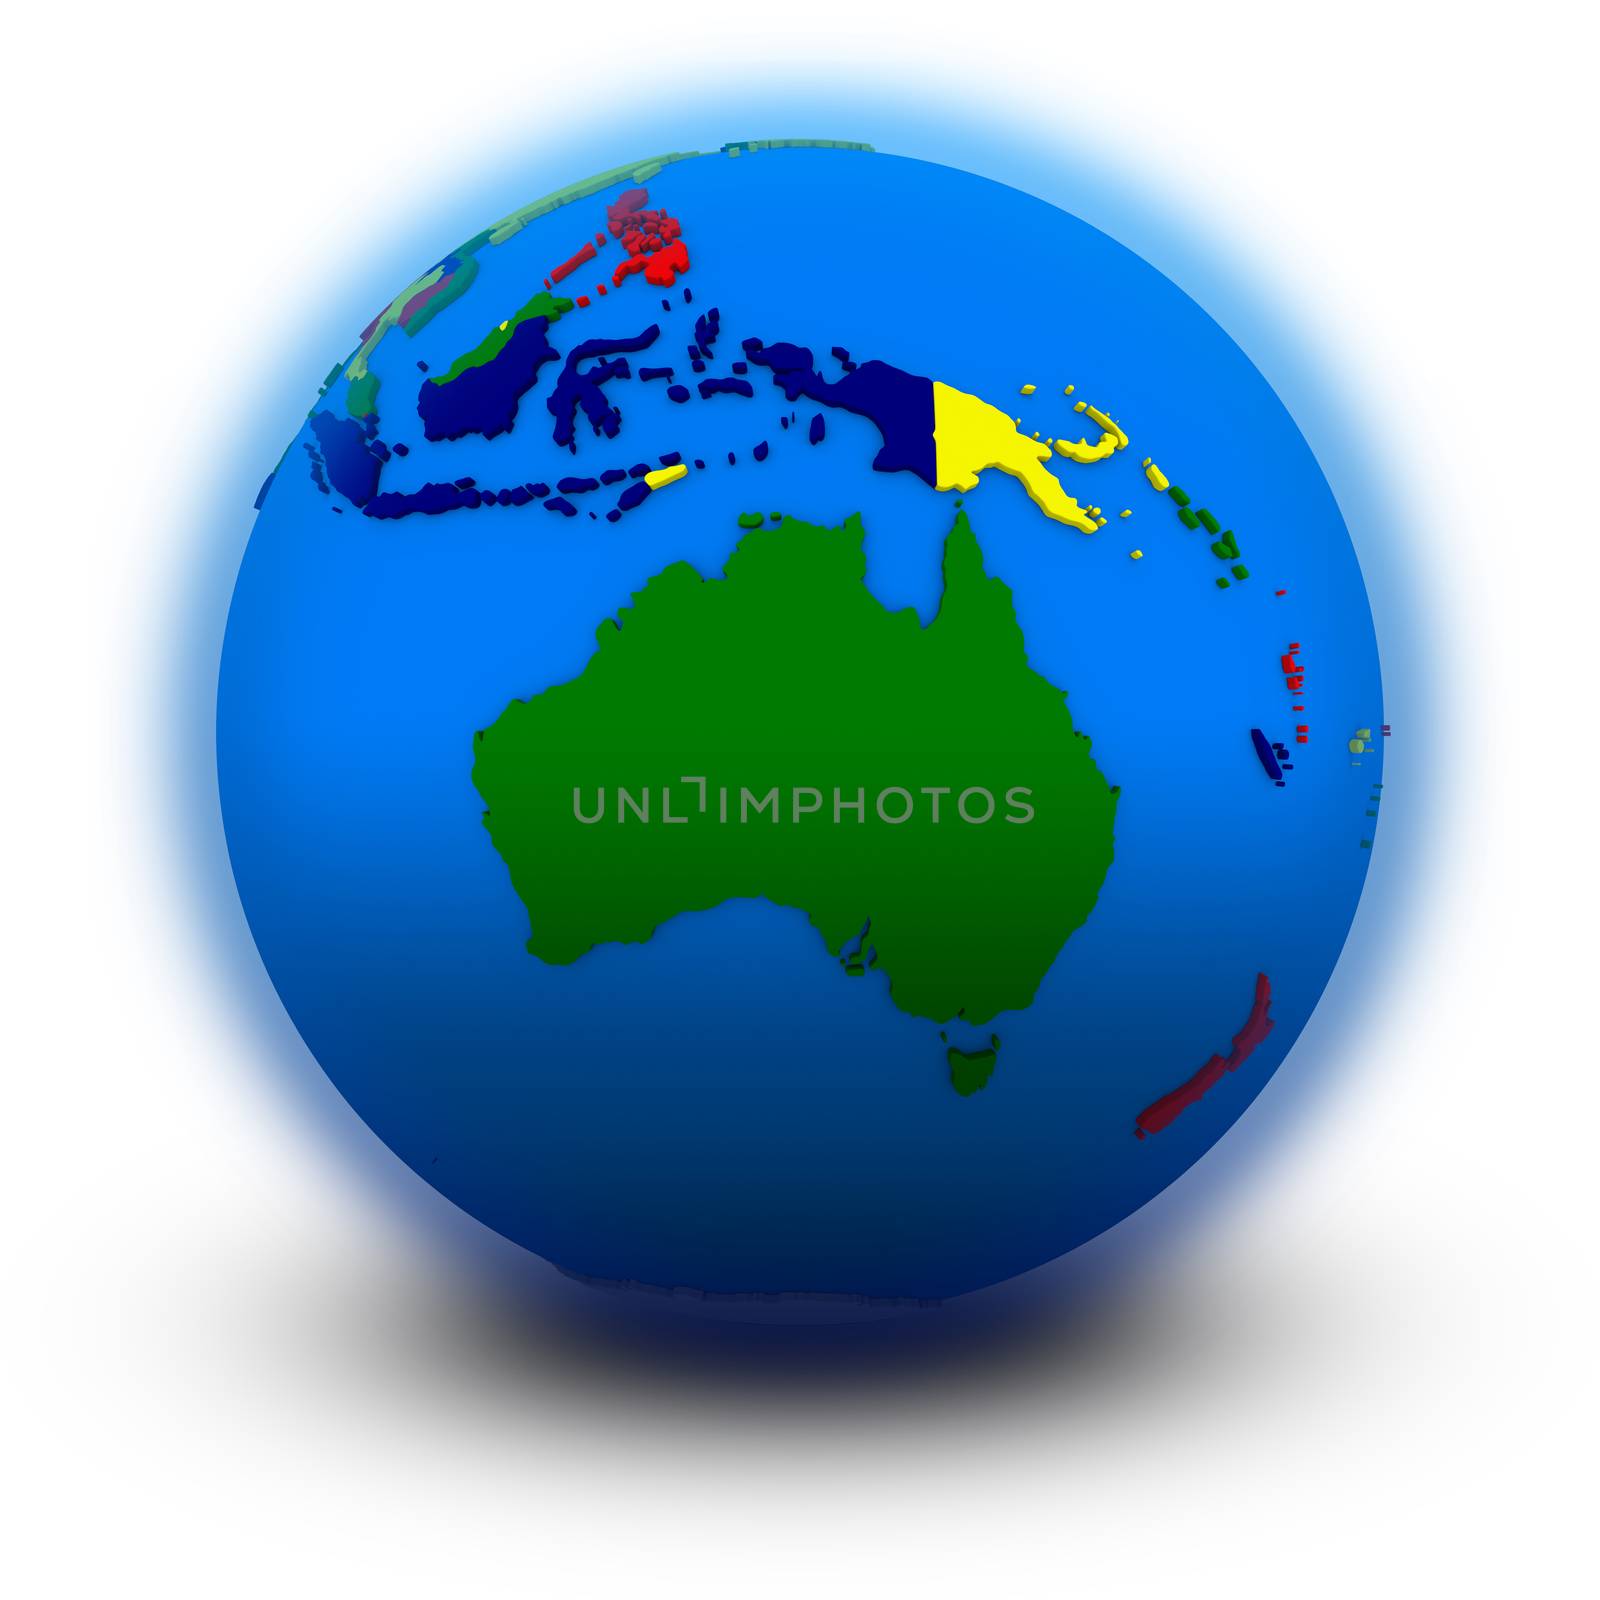 Australia on political globe by Harvepino